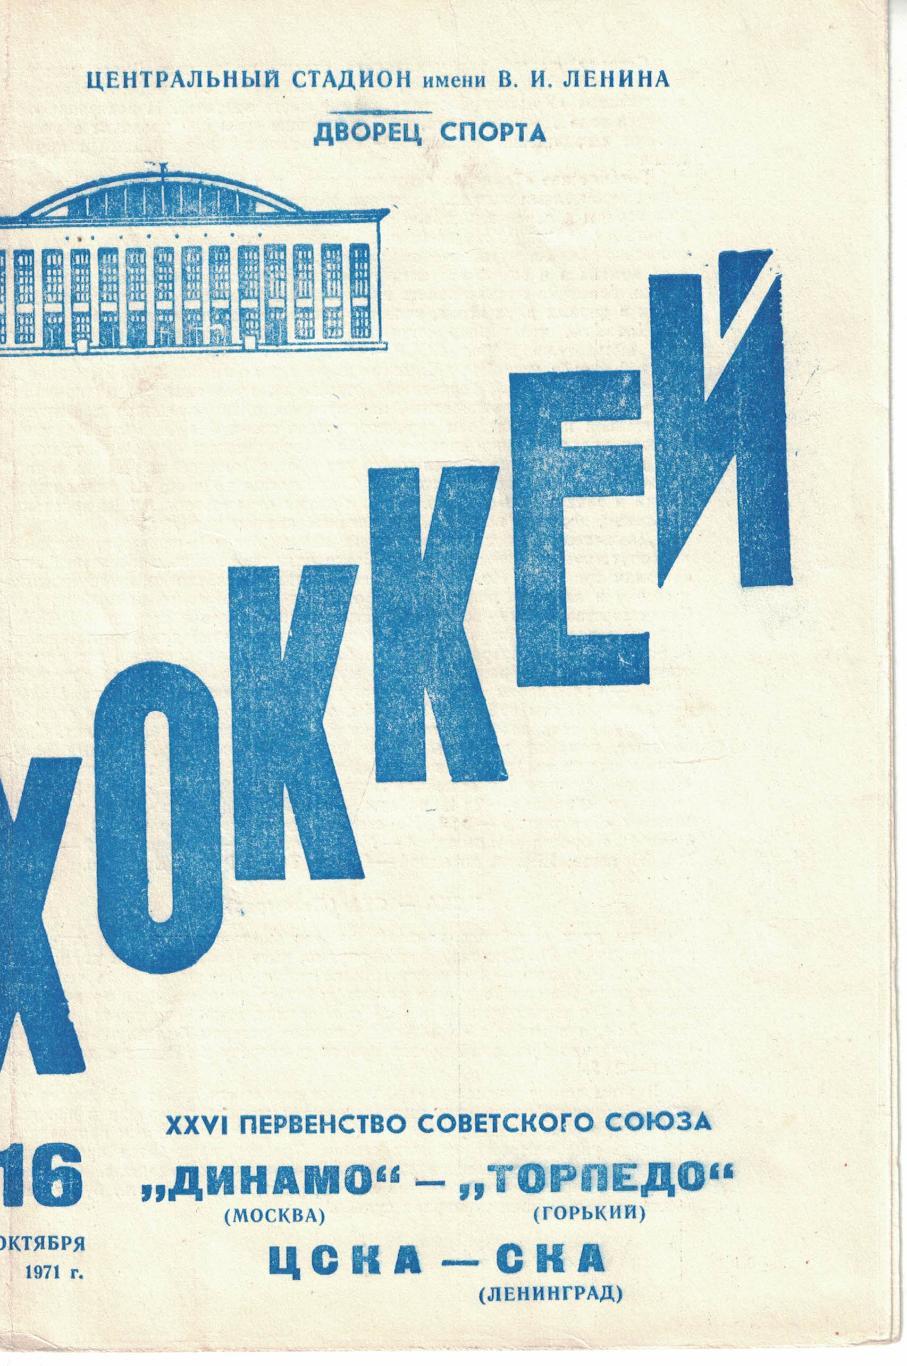 Динамо Москва - Торпедо Горький, ЦСКА - СКА Ленинград 16.10.1971 Чемпионат СССР